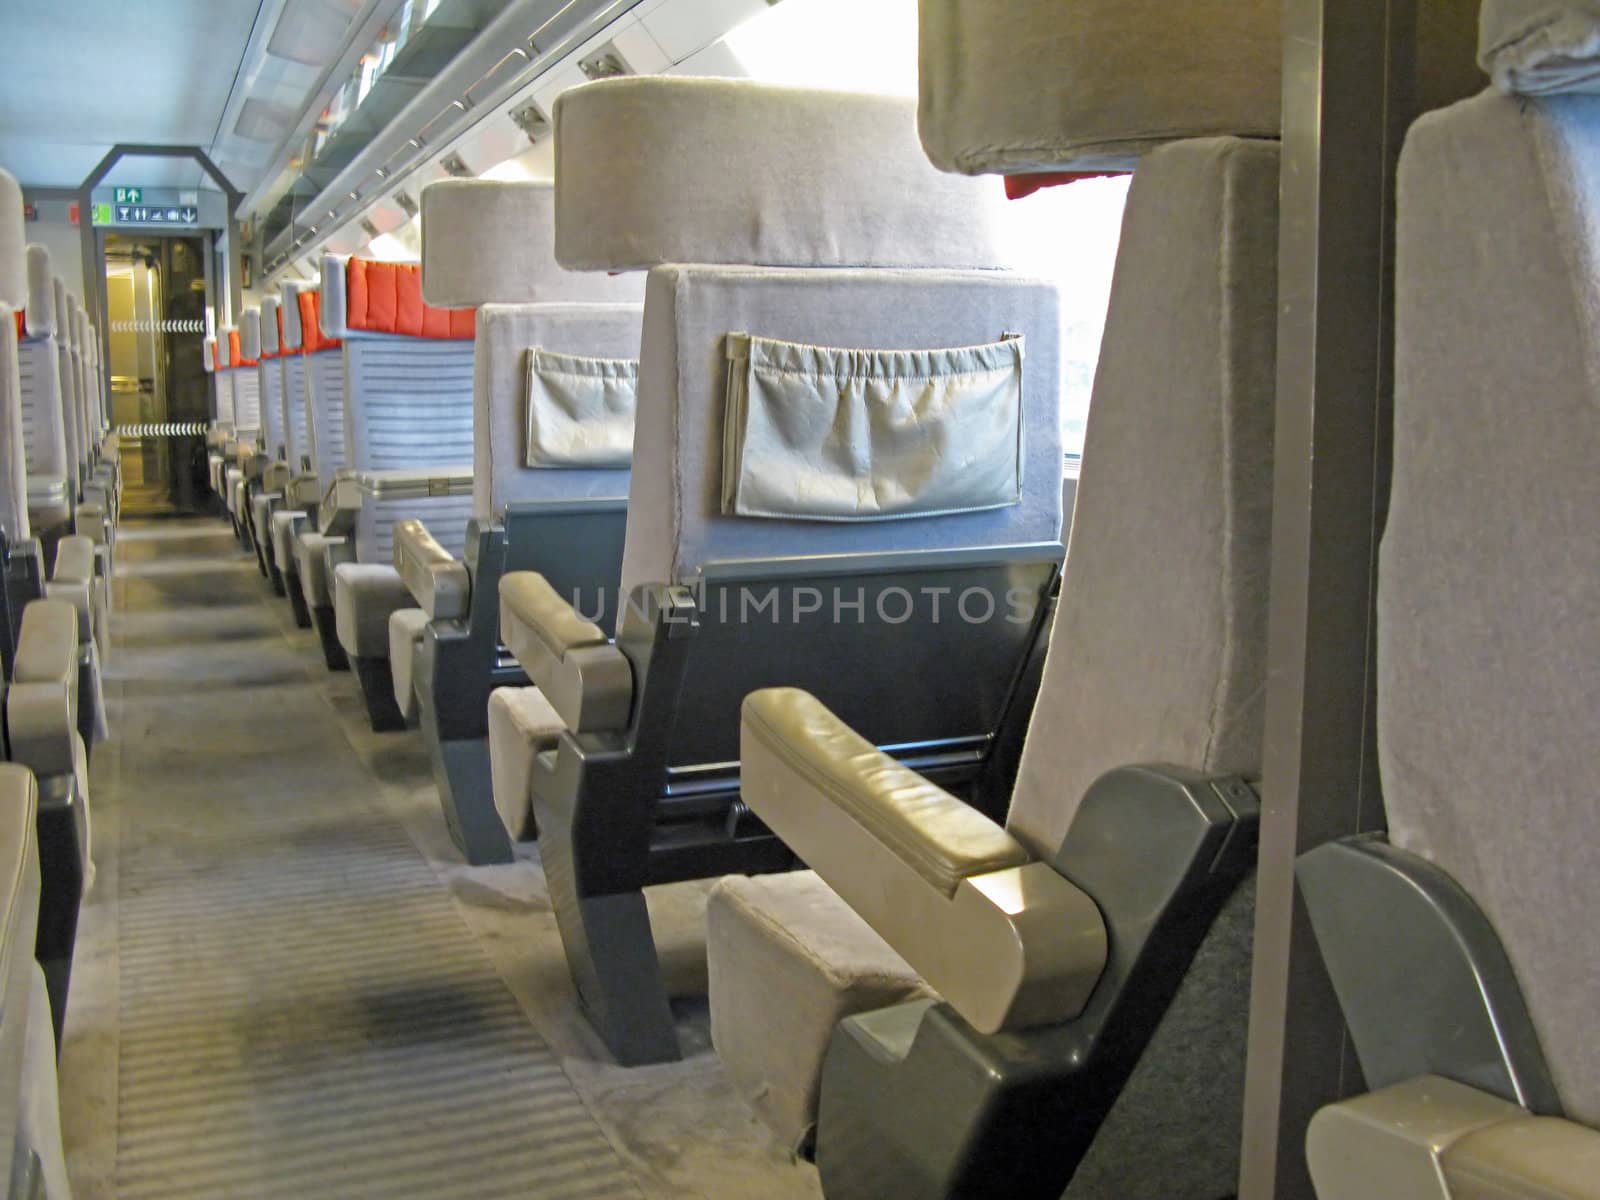 Train Seats by quackersnaps